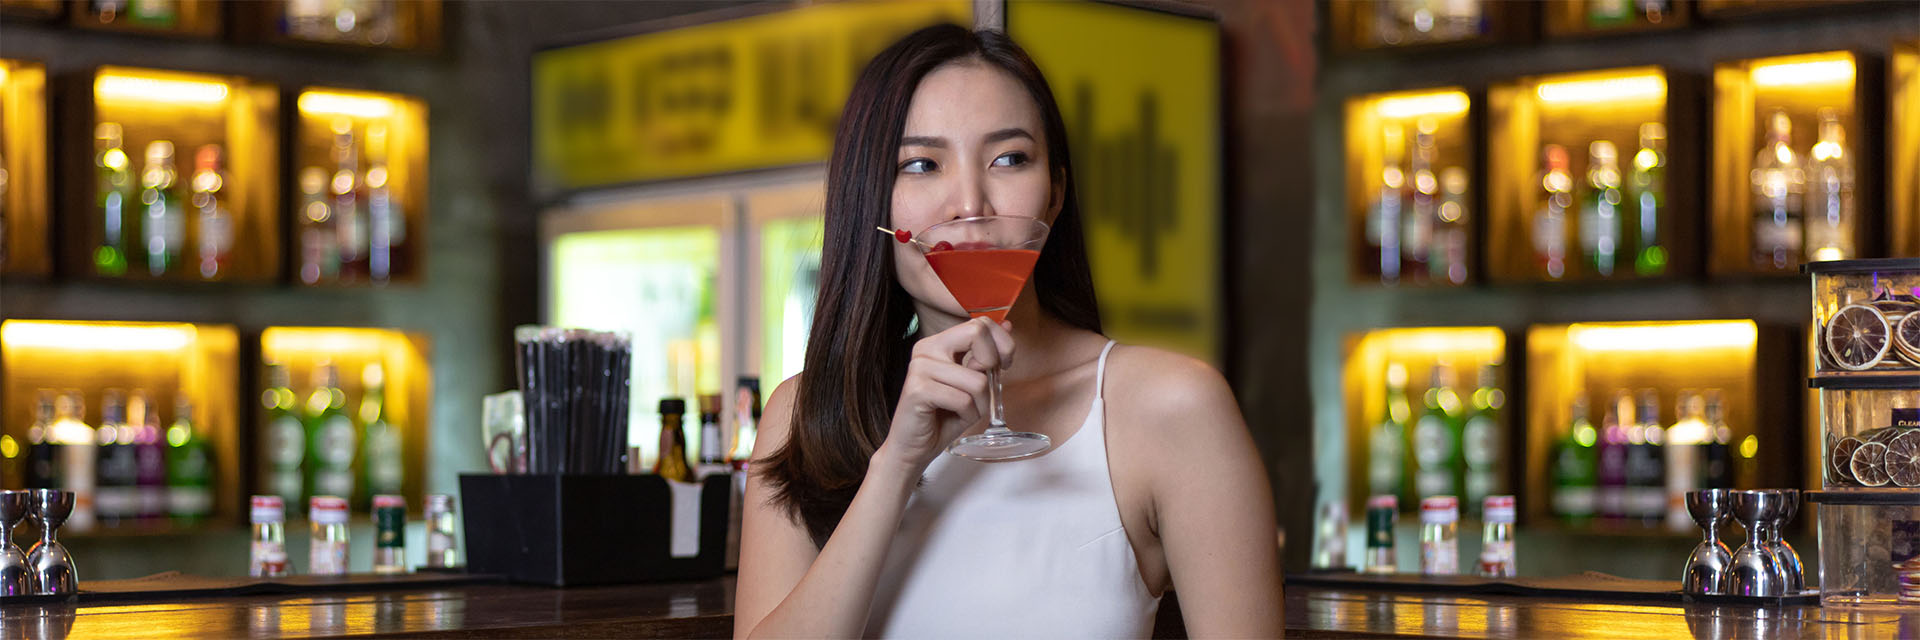 Woman drinking alone at a bar